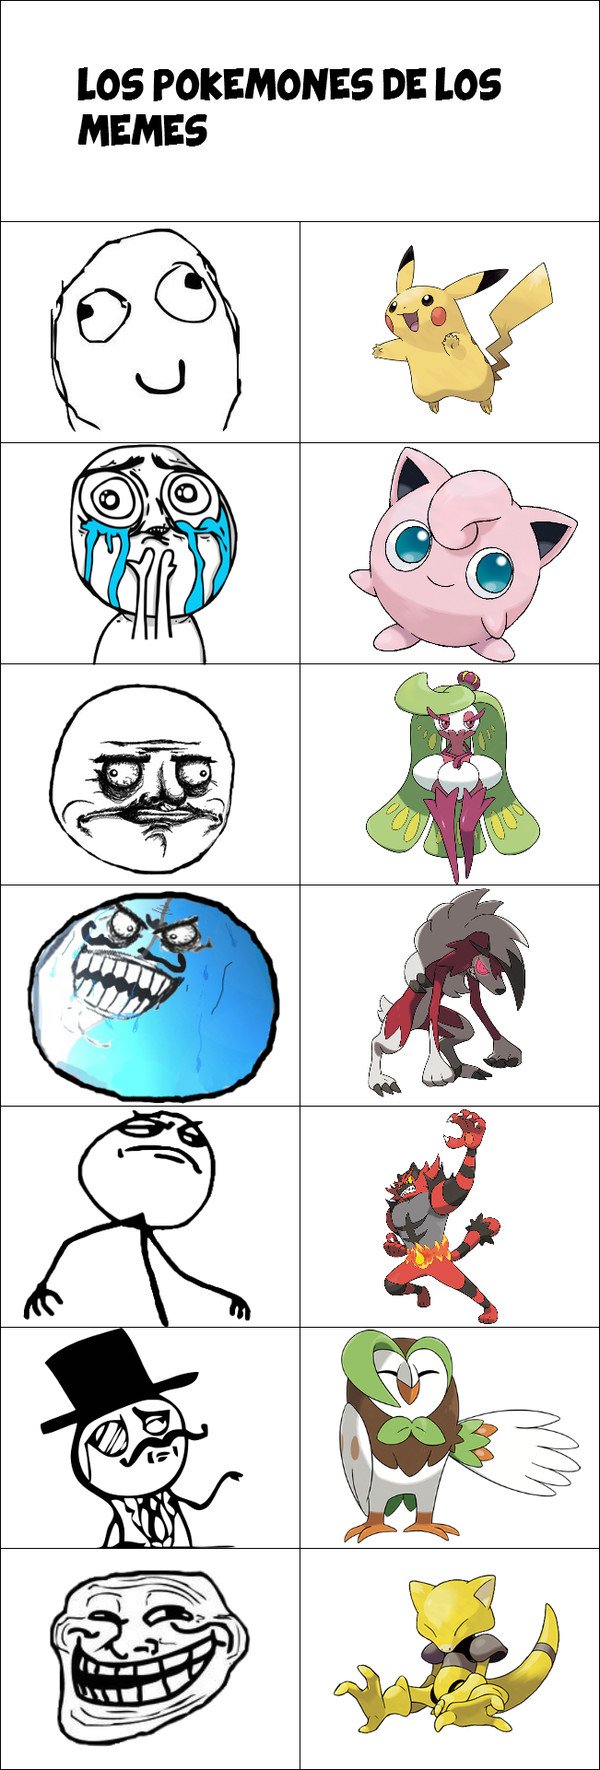 Allthethings - Cada Pokémon tiene su rage